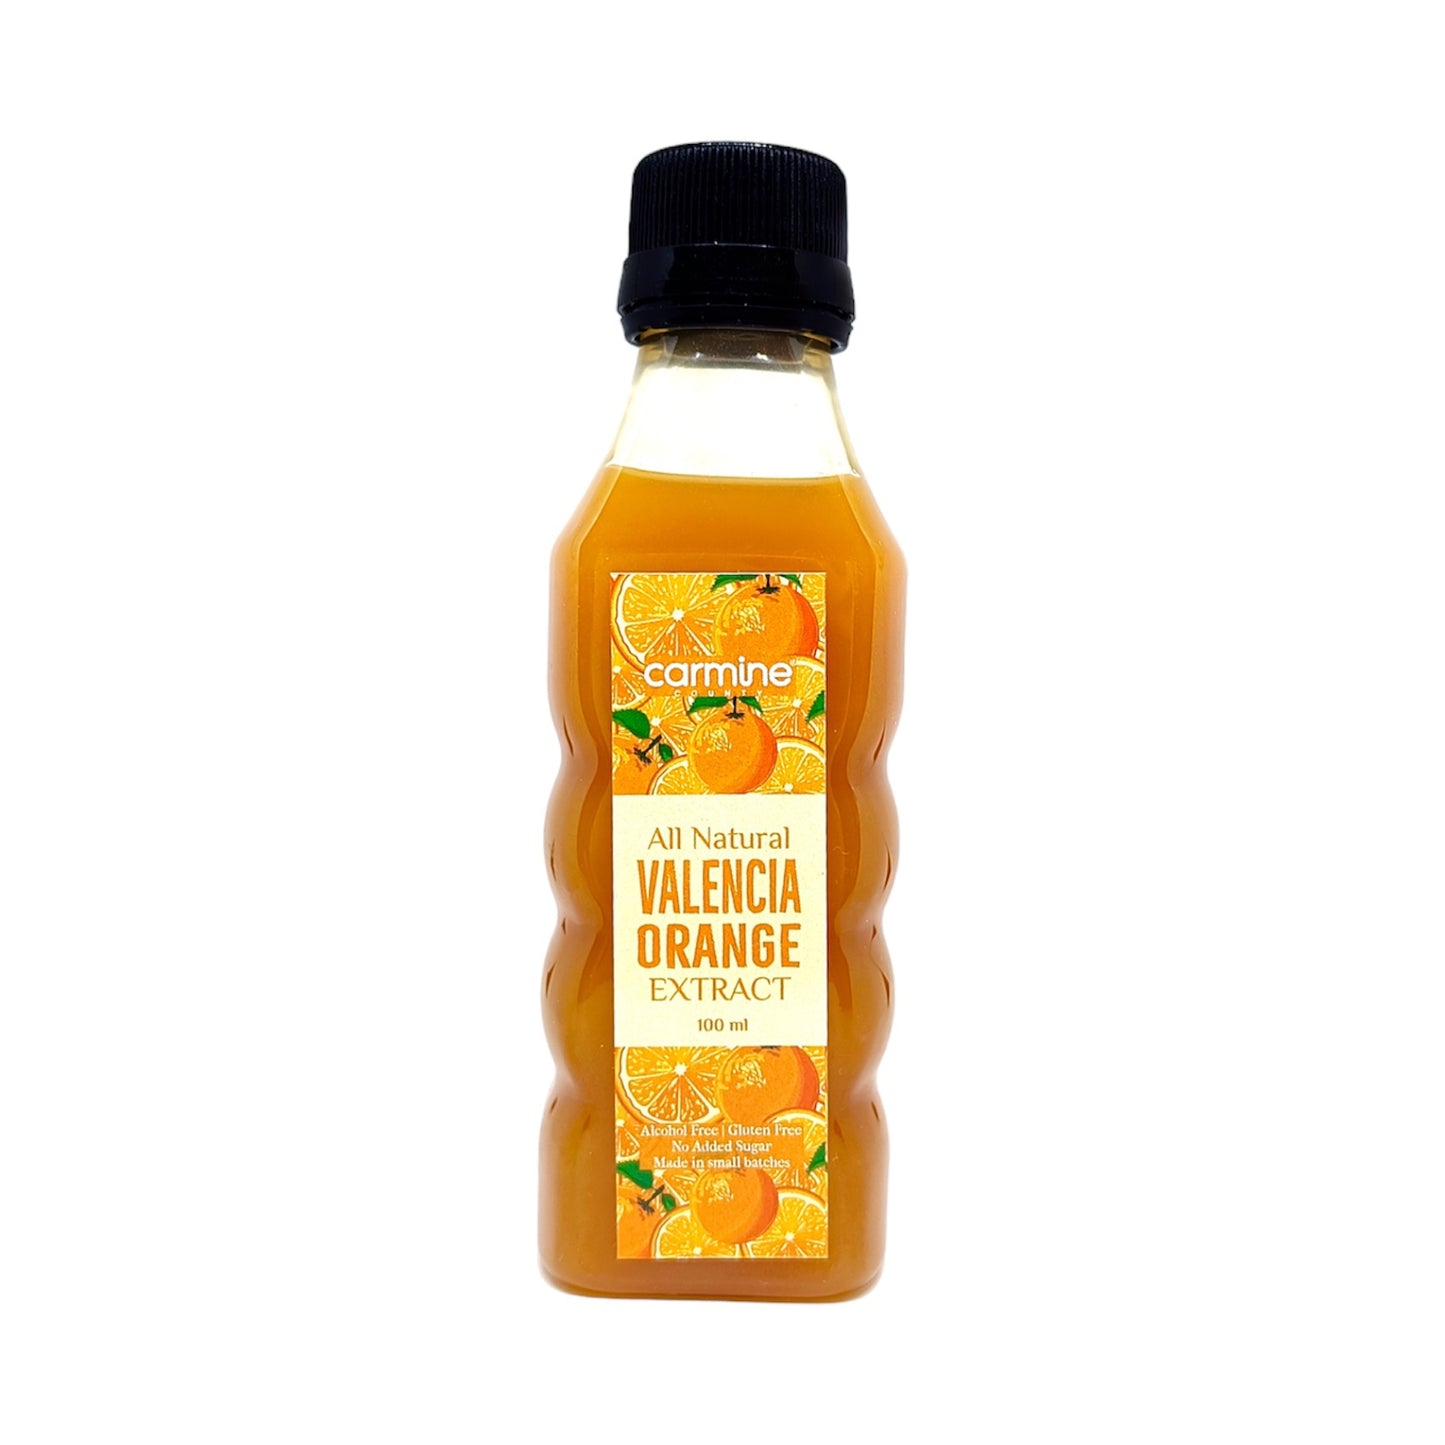 Carmine County All Natural Valencia Orange Extract 100 ml